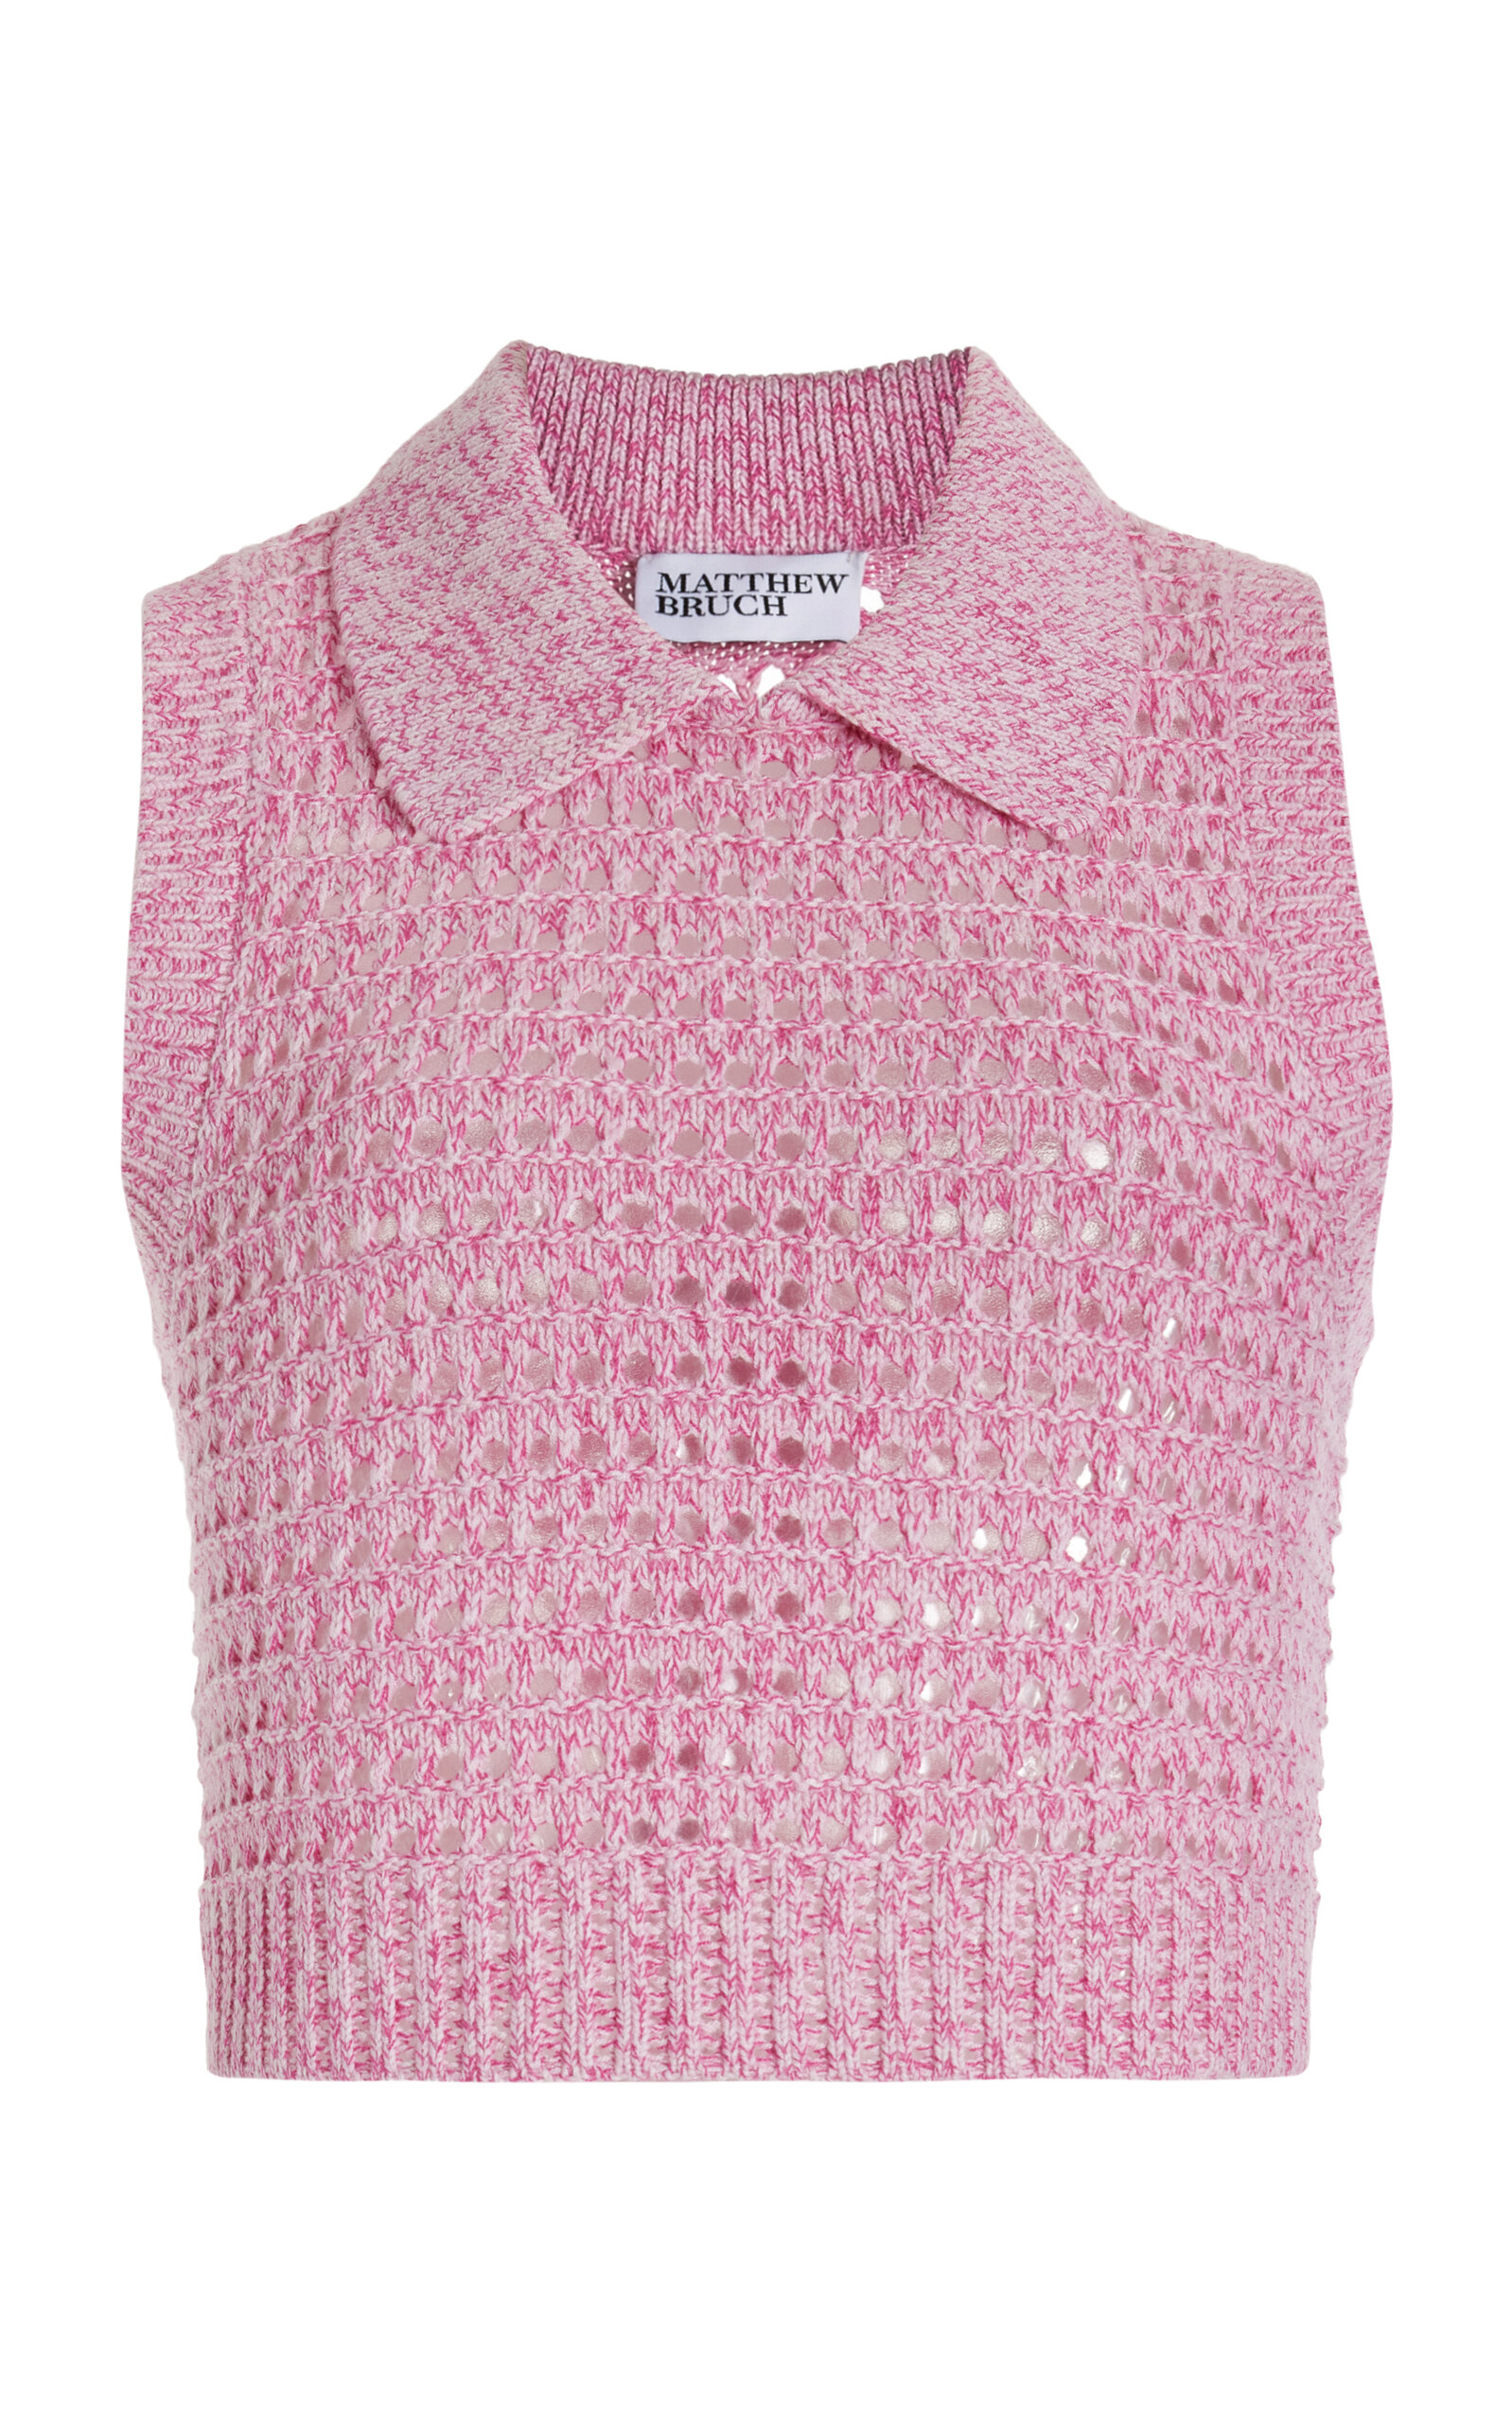 Matthew Bruch Cropped Open-knit Wool-blend Top In Pink